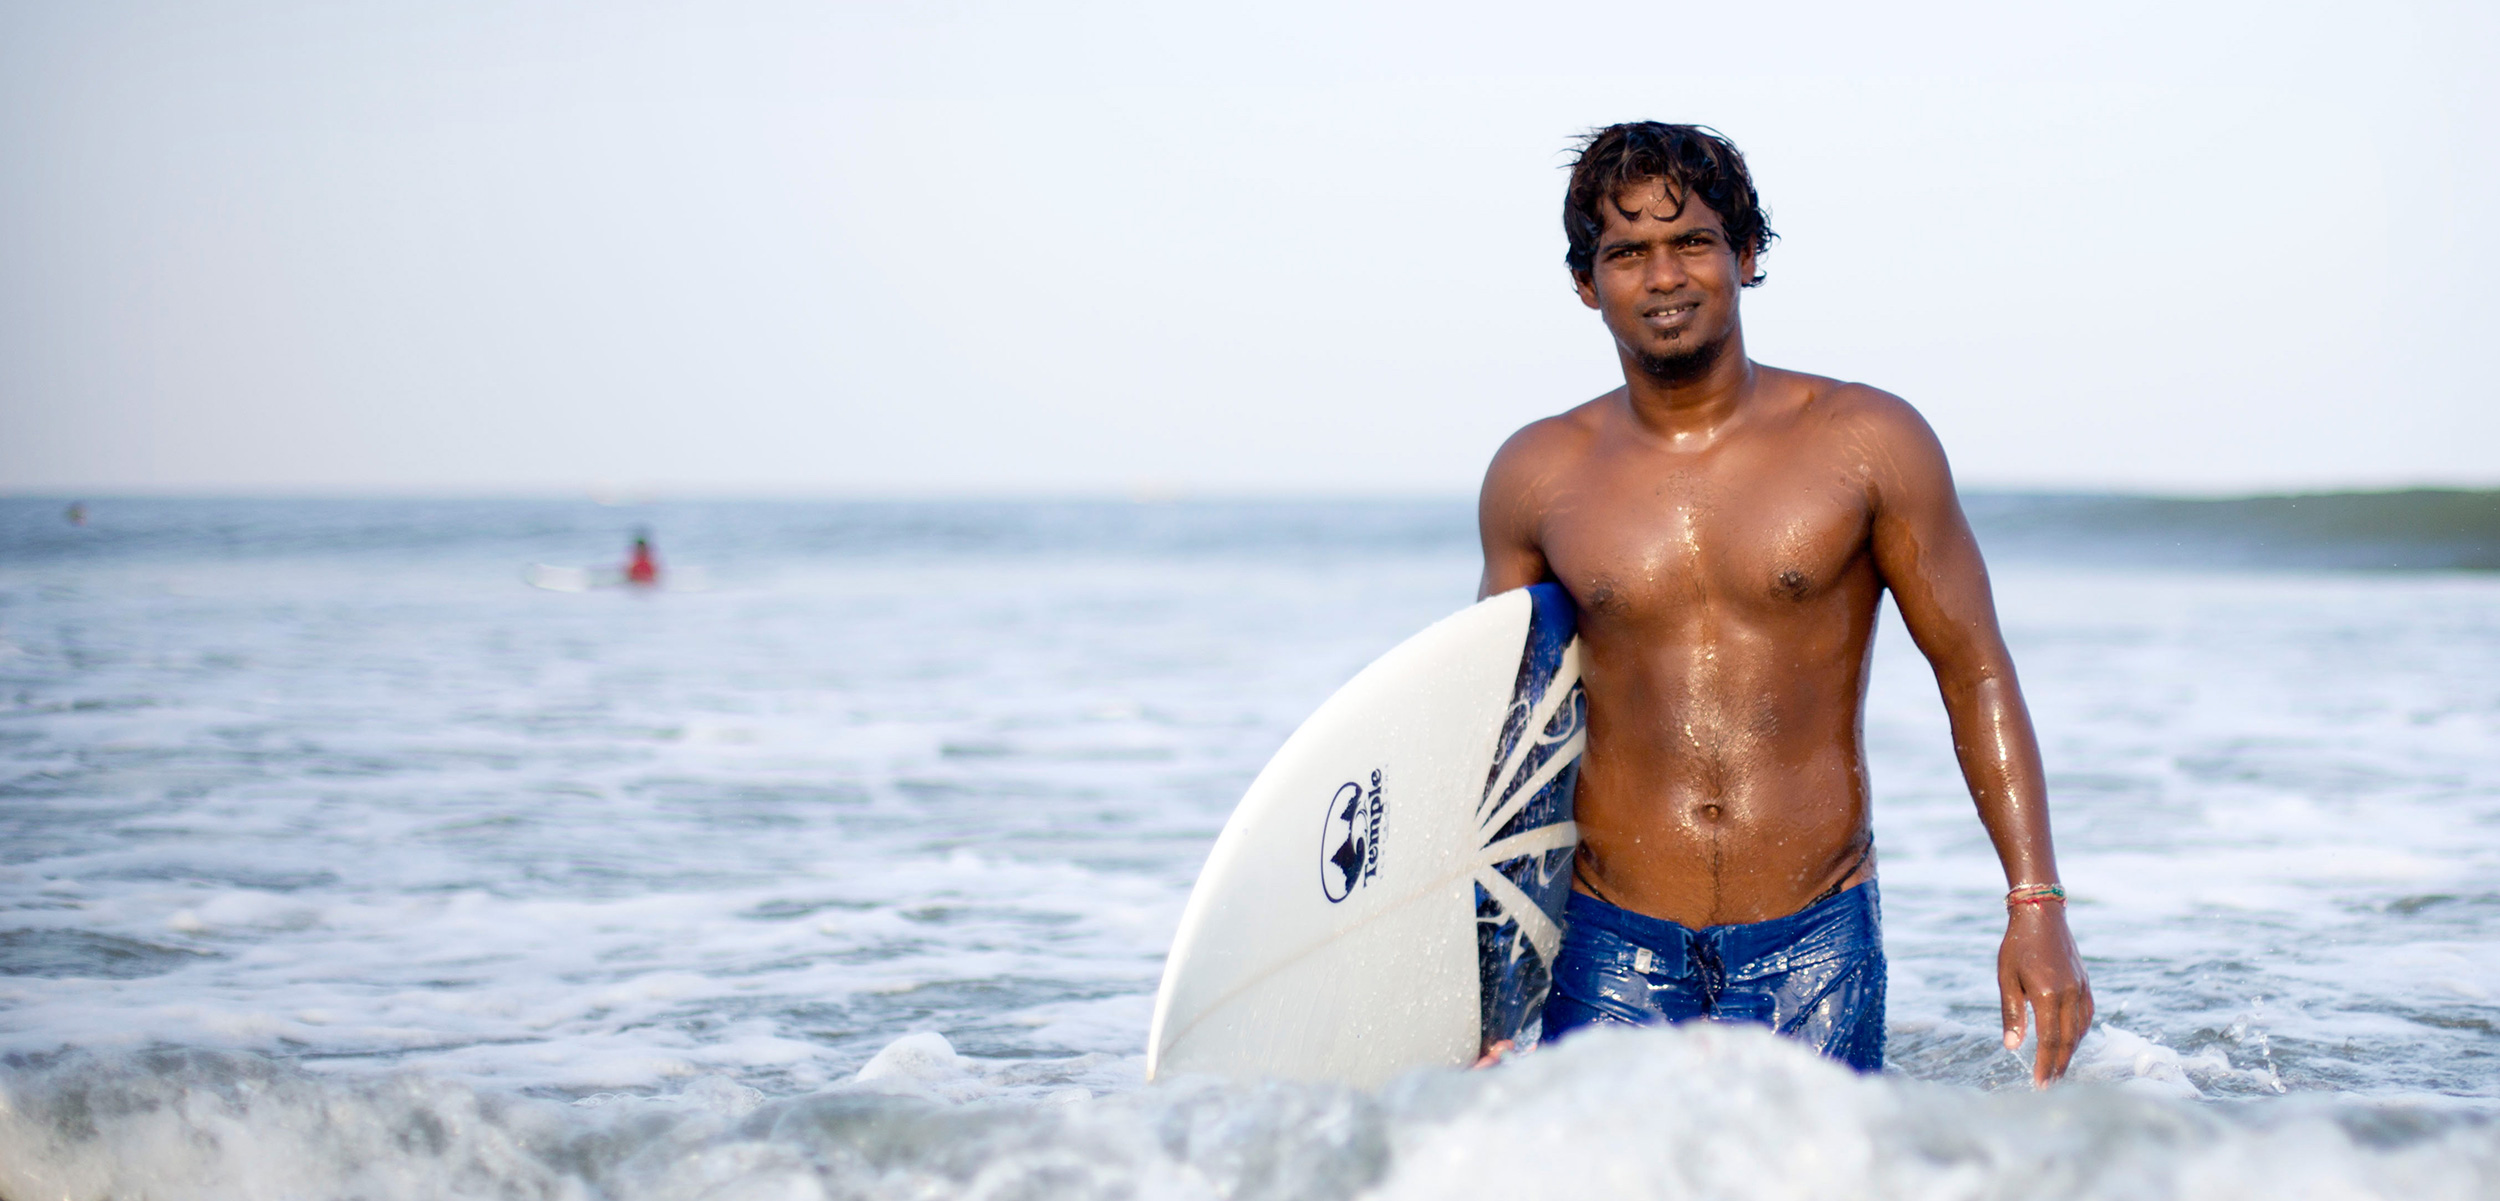 Santhosh Moorthi, fisherman, sculptor, surfer, and board shaper. Photo by Jyothy Karat